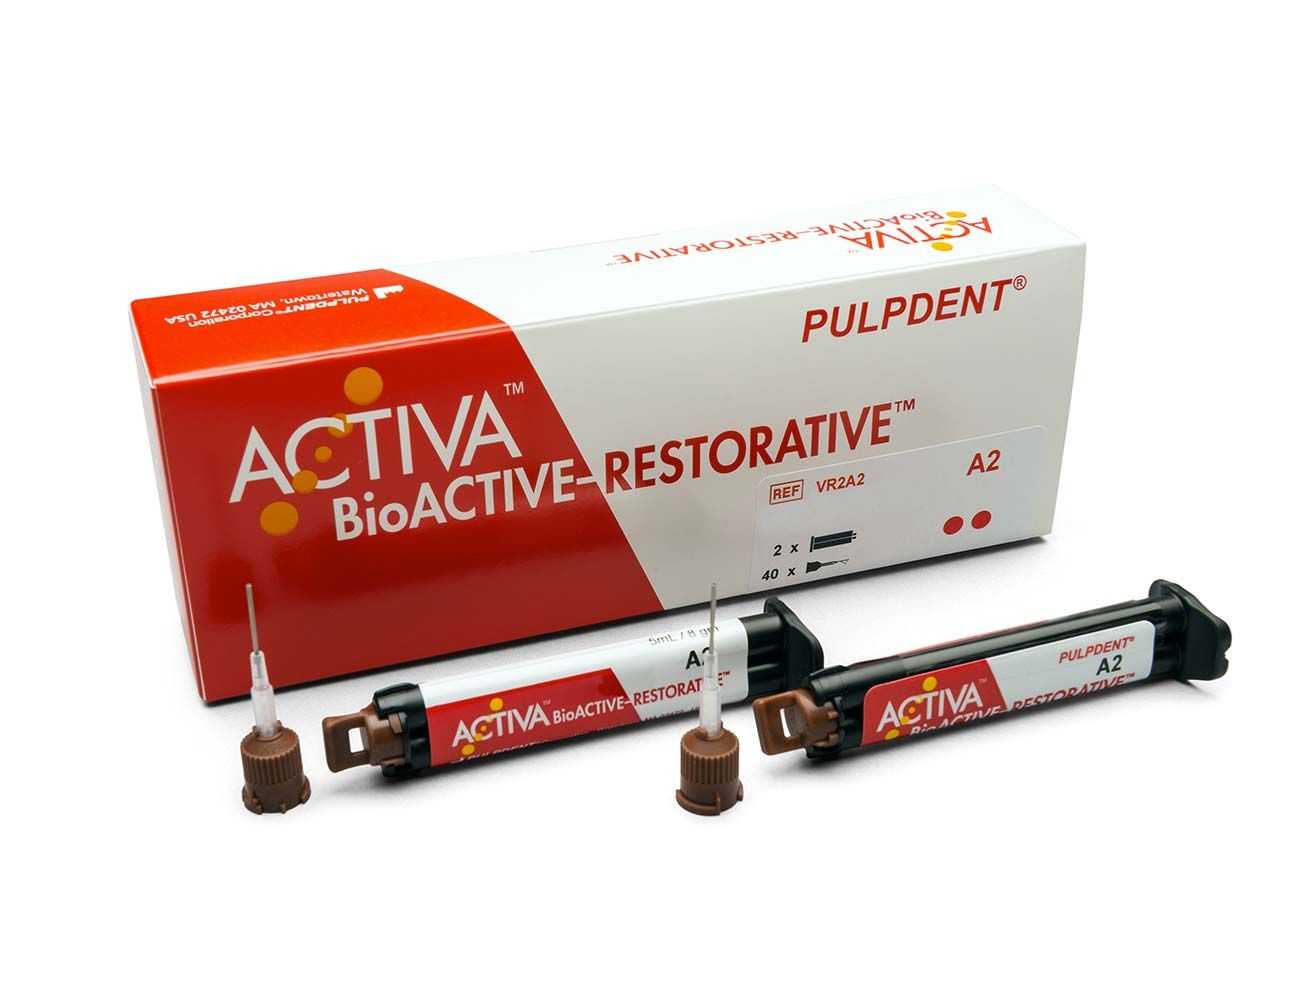 ACTIVA BioACTIVE-RESTORATIVE from Pulpdent